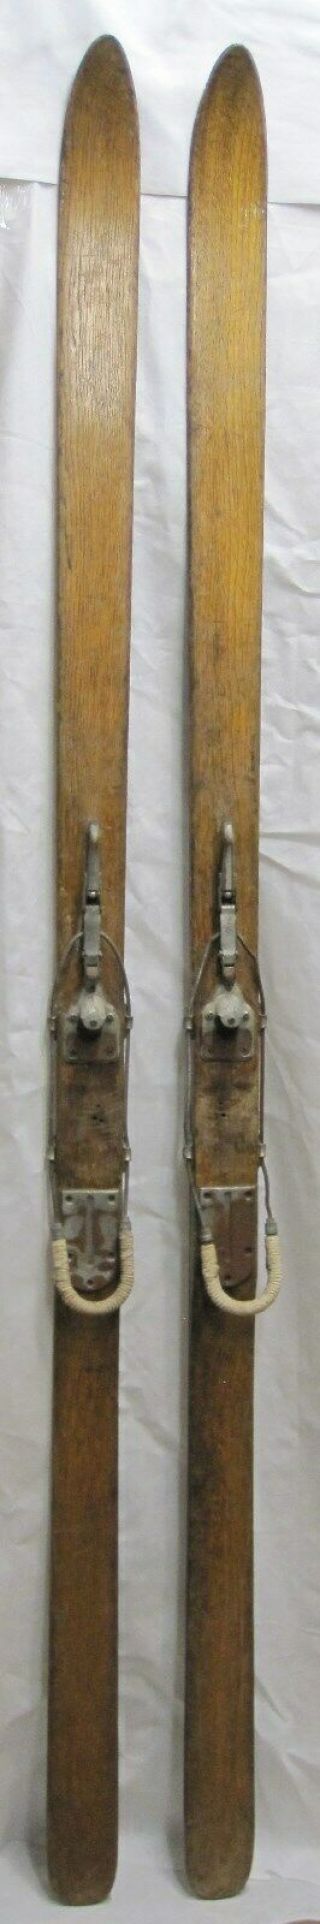 Vintage Wood Skis W/ Metal Bindings,  Ridgetop 83 " Long - Decor